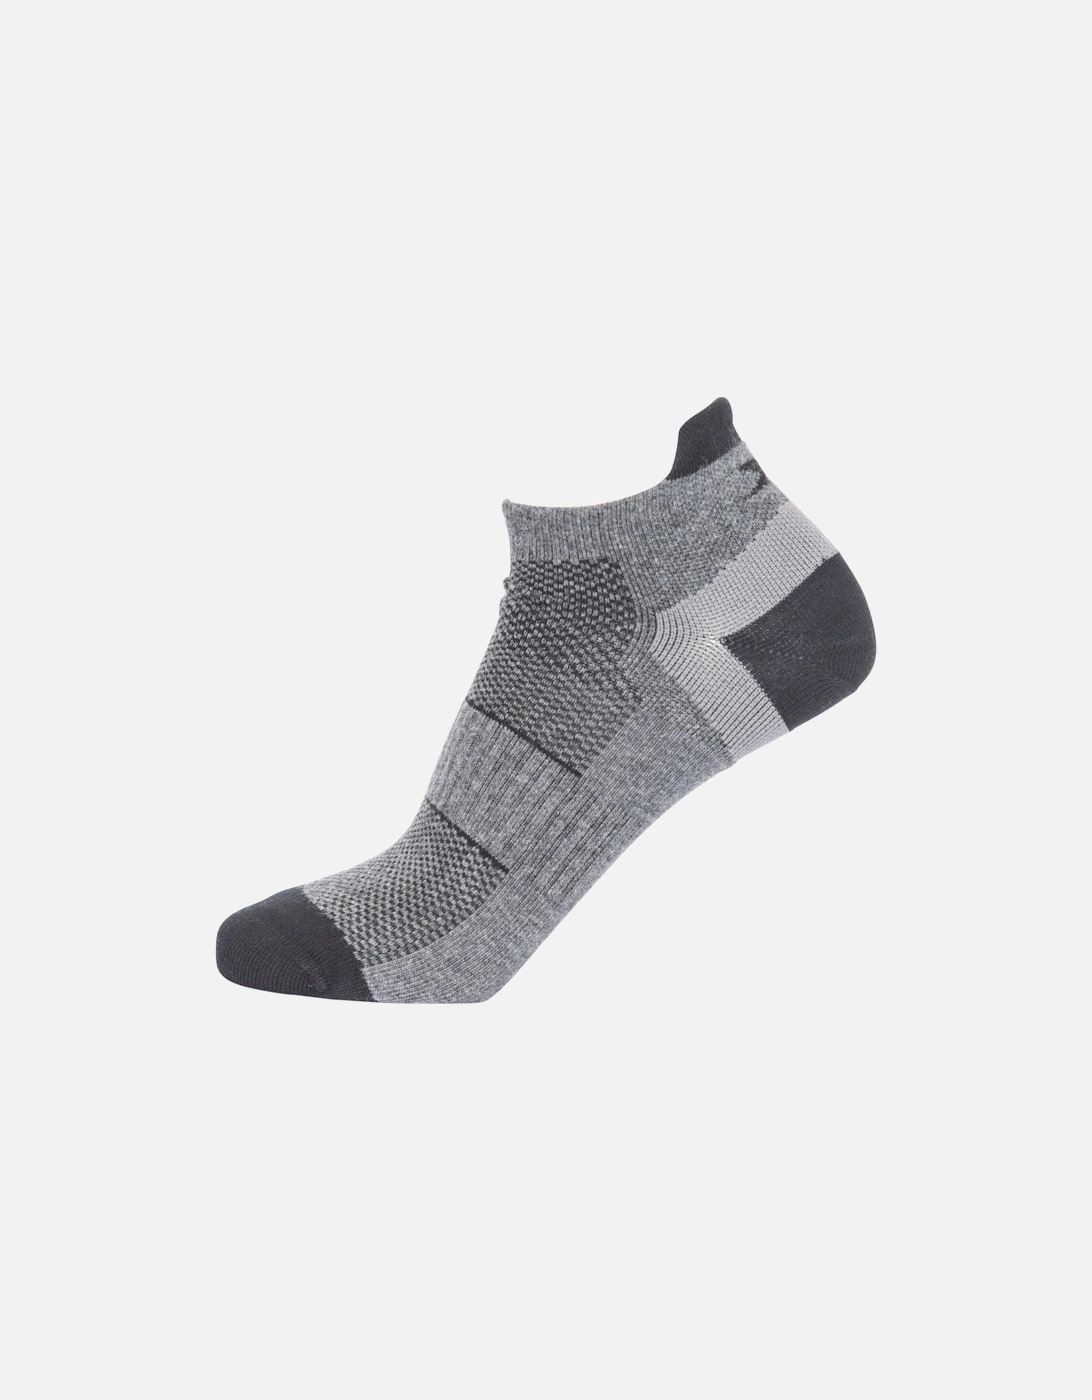 Unisex Adult Enclose Sports Socks